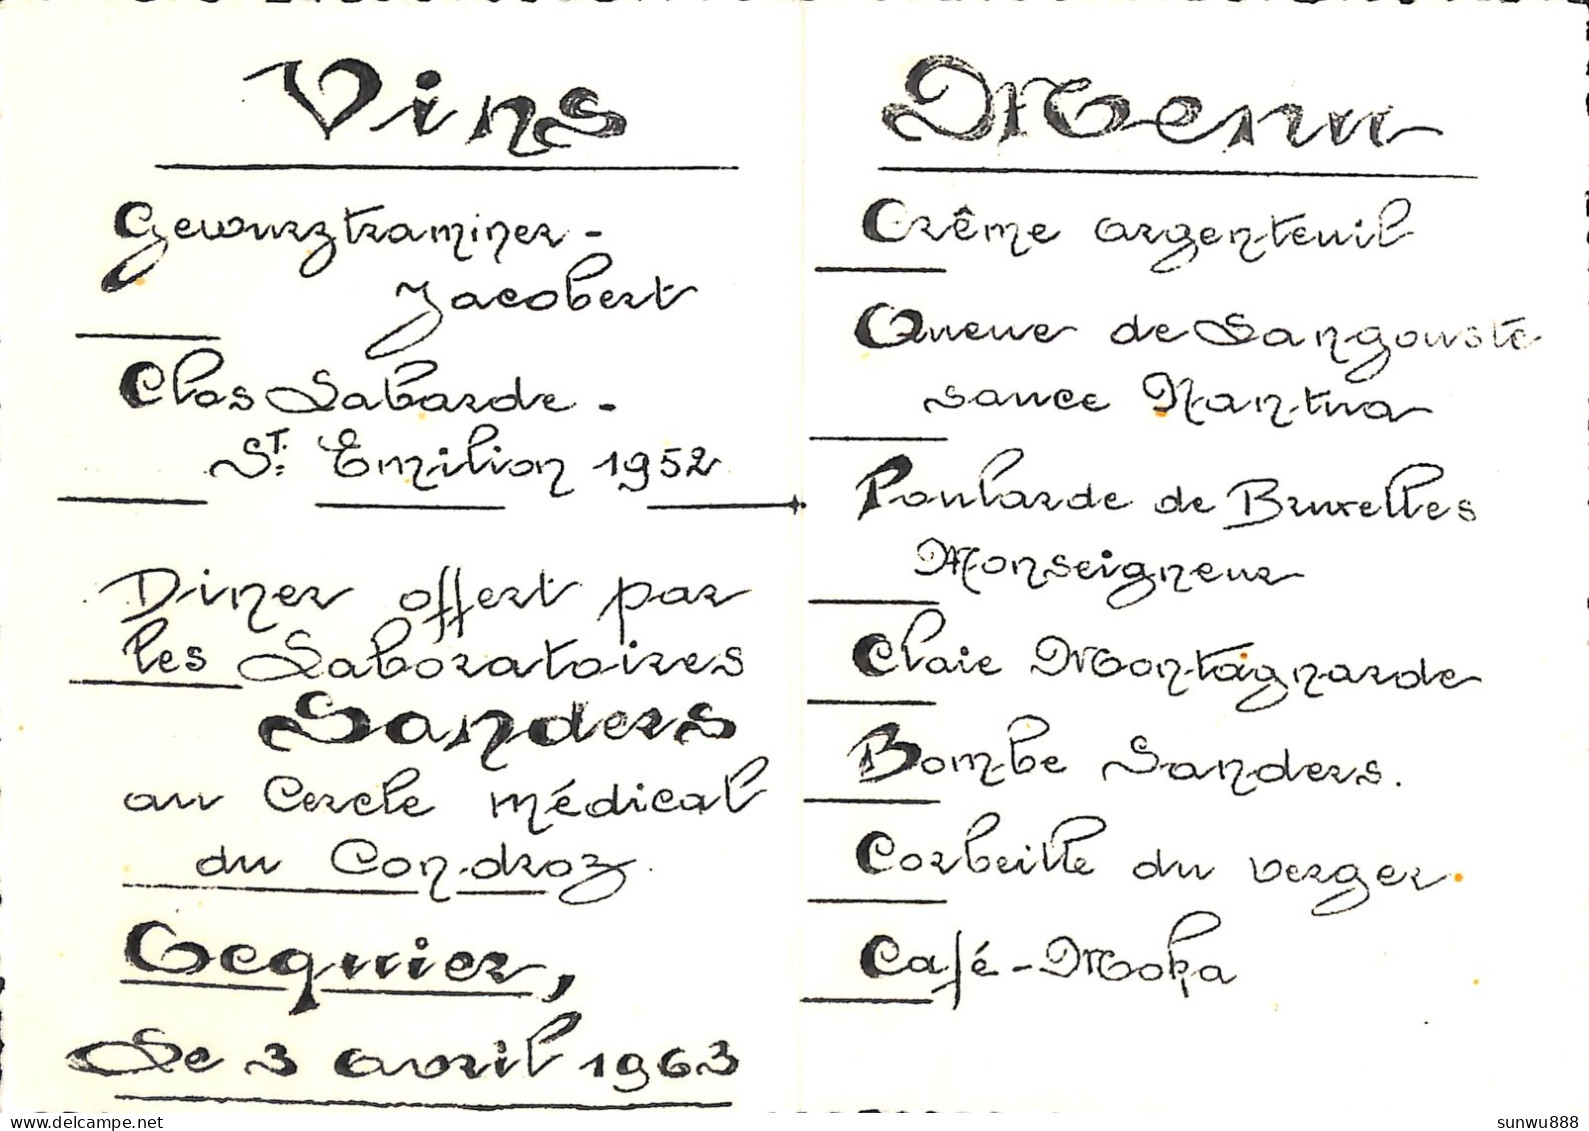 Ocquier - Castel Du Val D'Or - Double Carte Menu Photos 1963 - Clavier